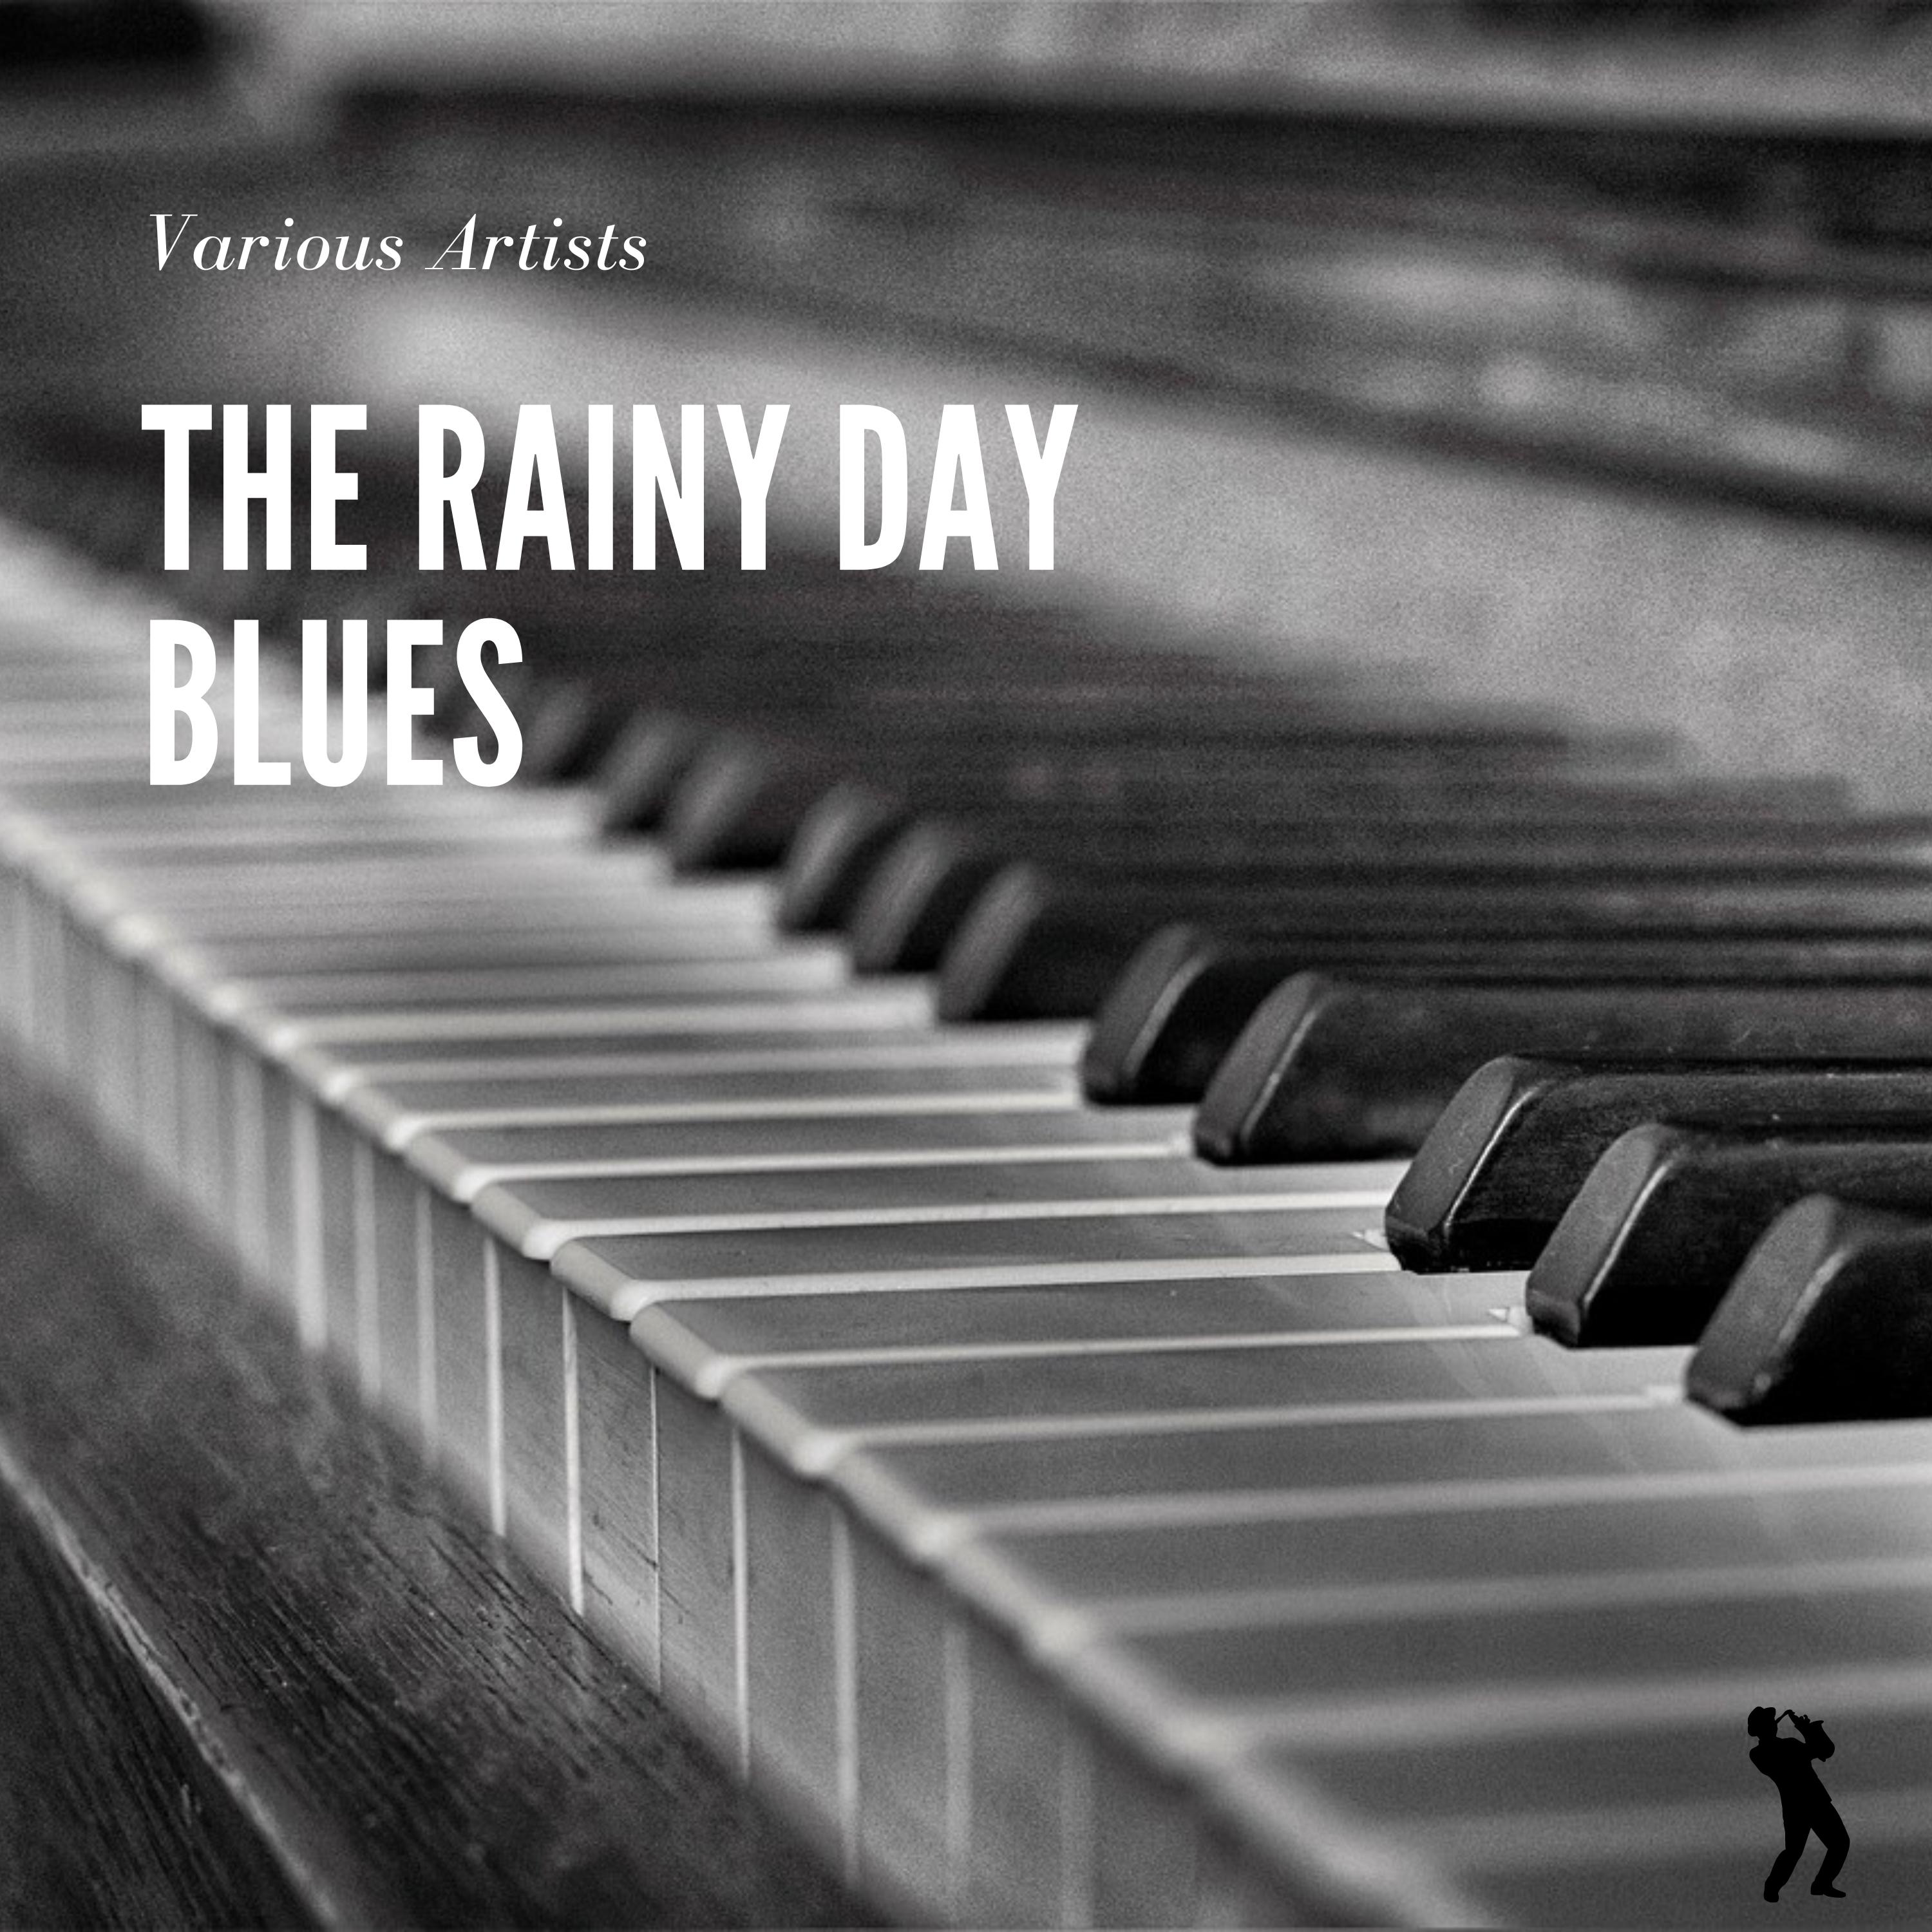 Sonny Wilson - The Rainy Day Blues